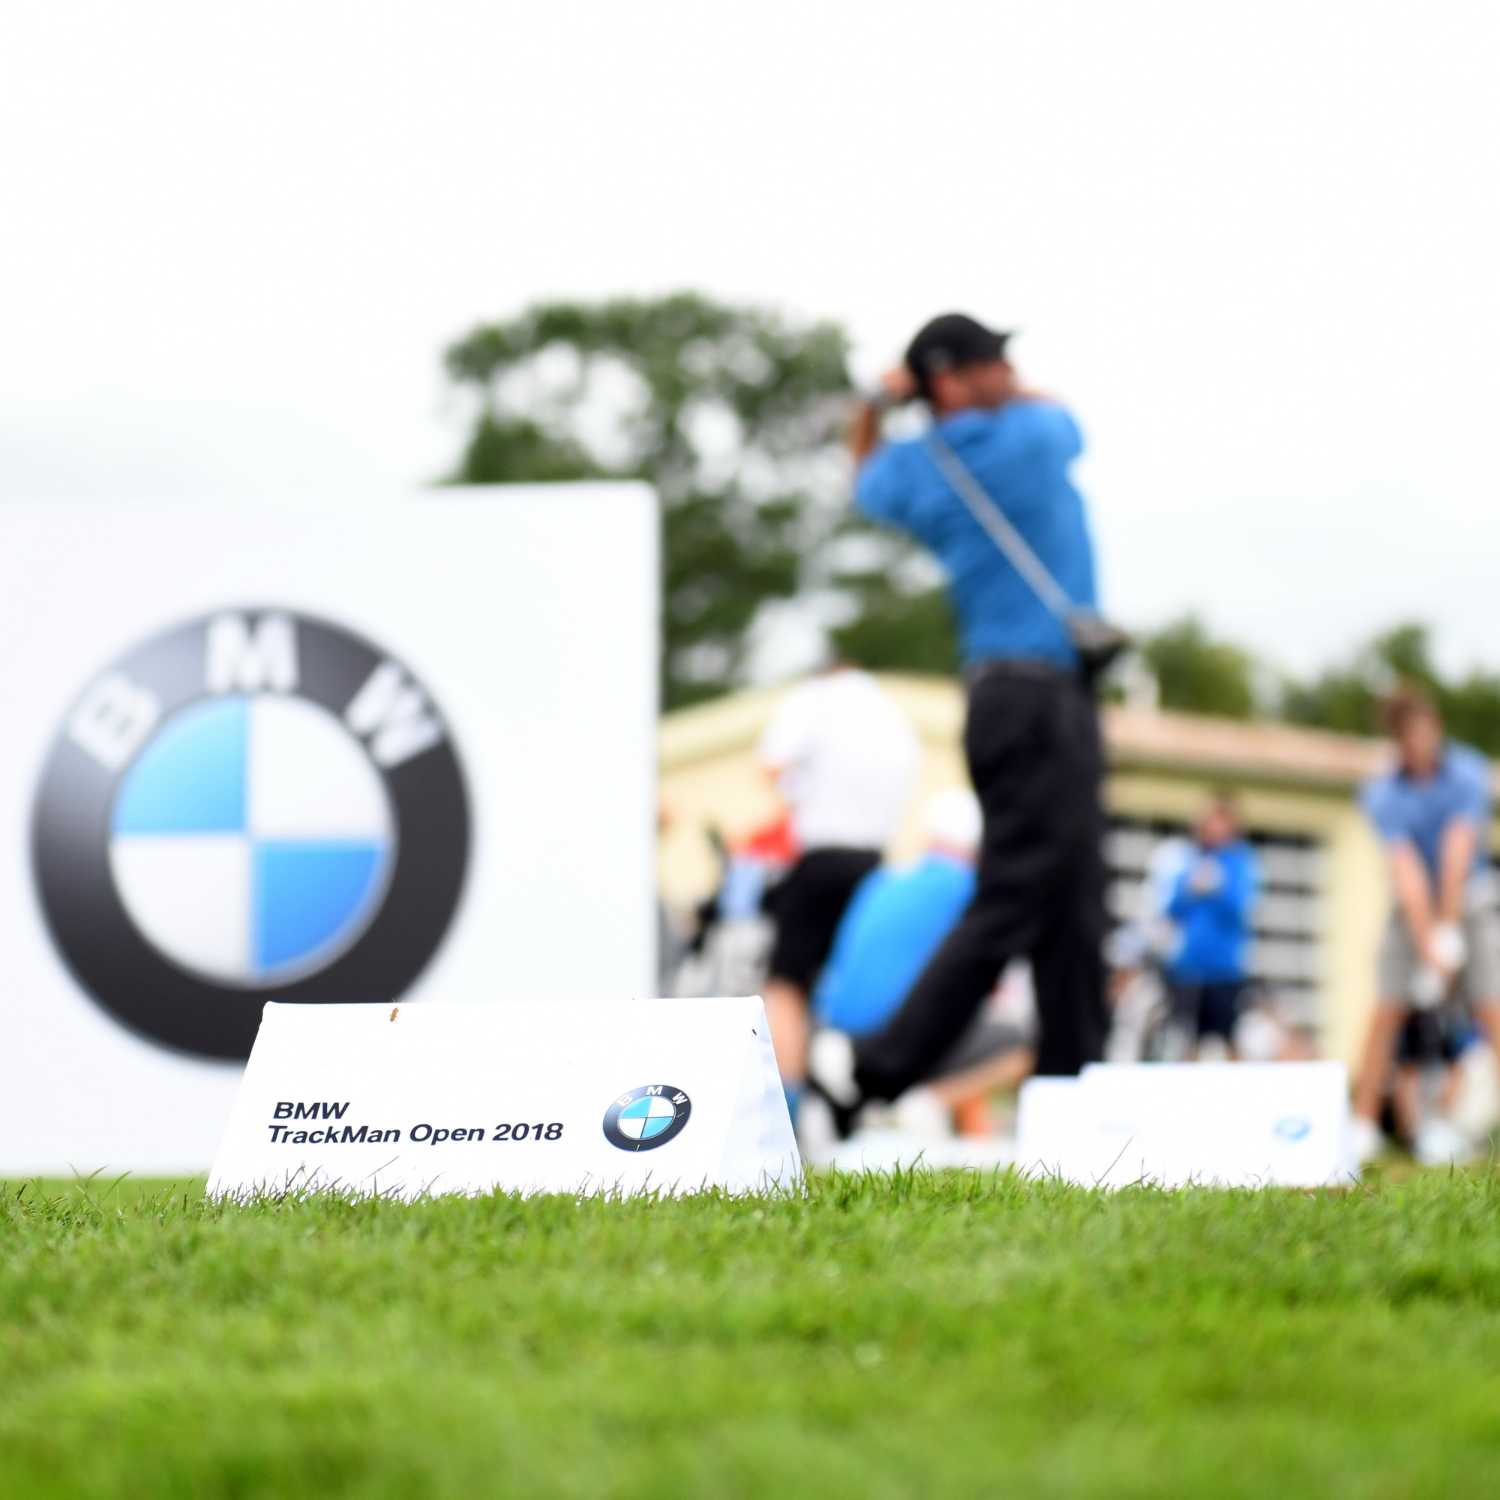 Open continue. БМВ гольф. BMW Golf турнир. BMW open odds. Pull to open BMW.